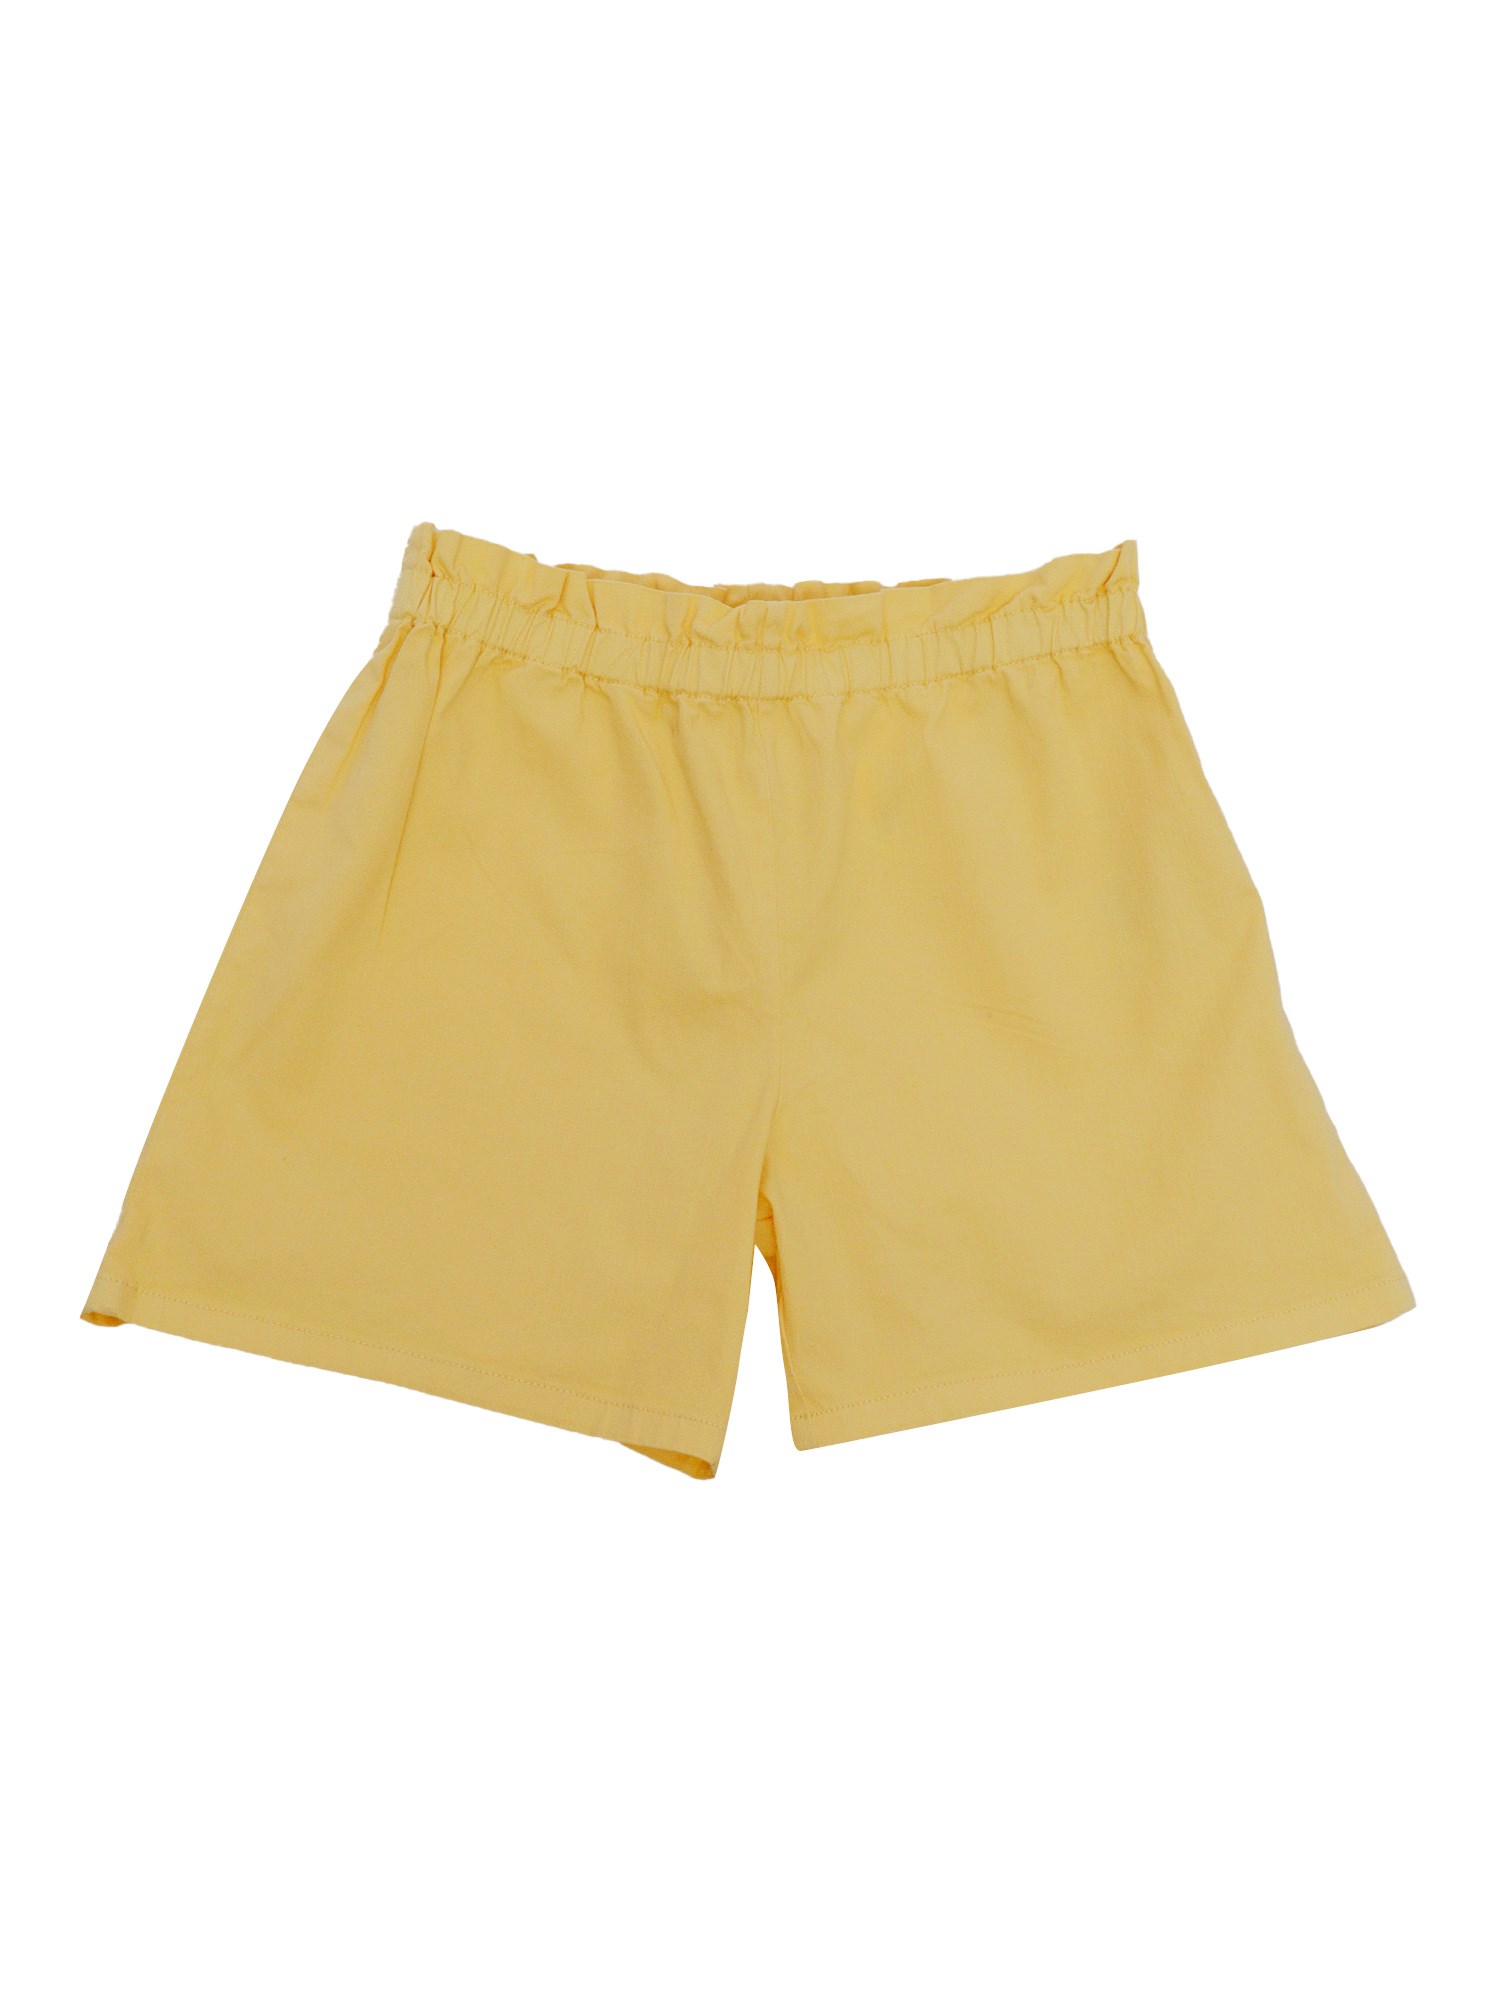 Bonpoint Milly Yellow Shorts